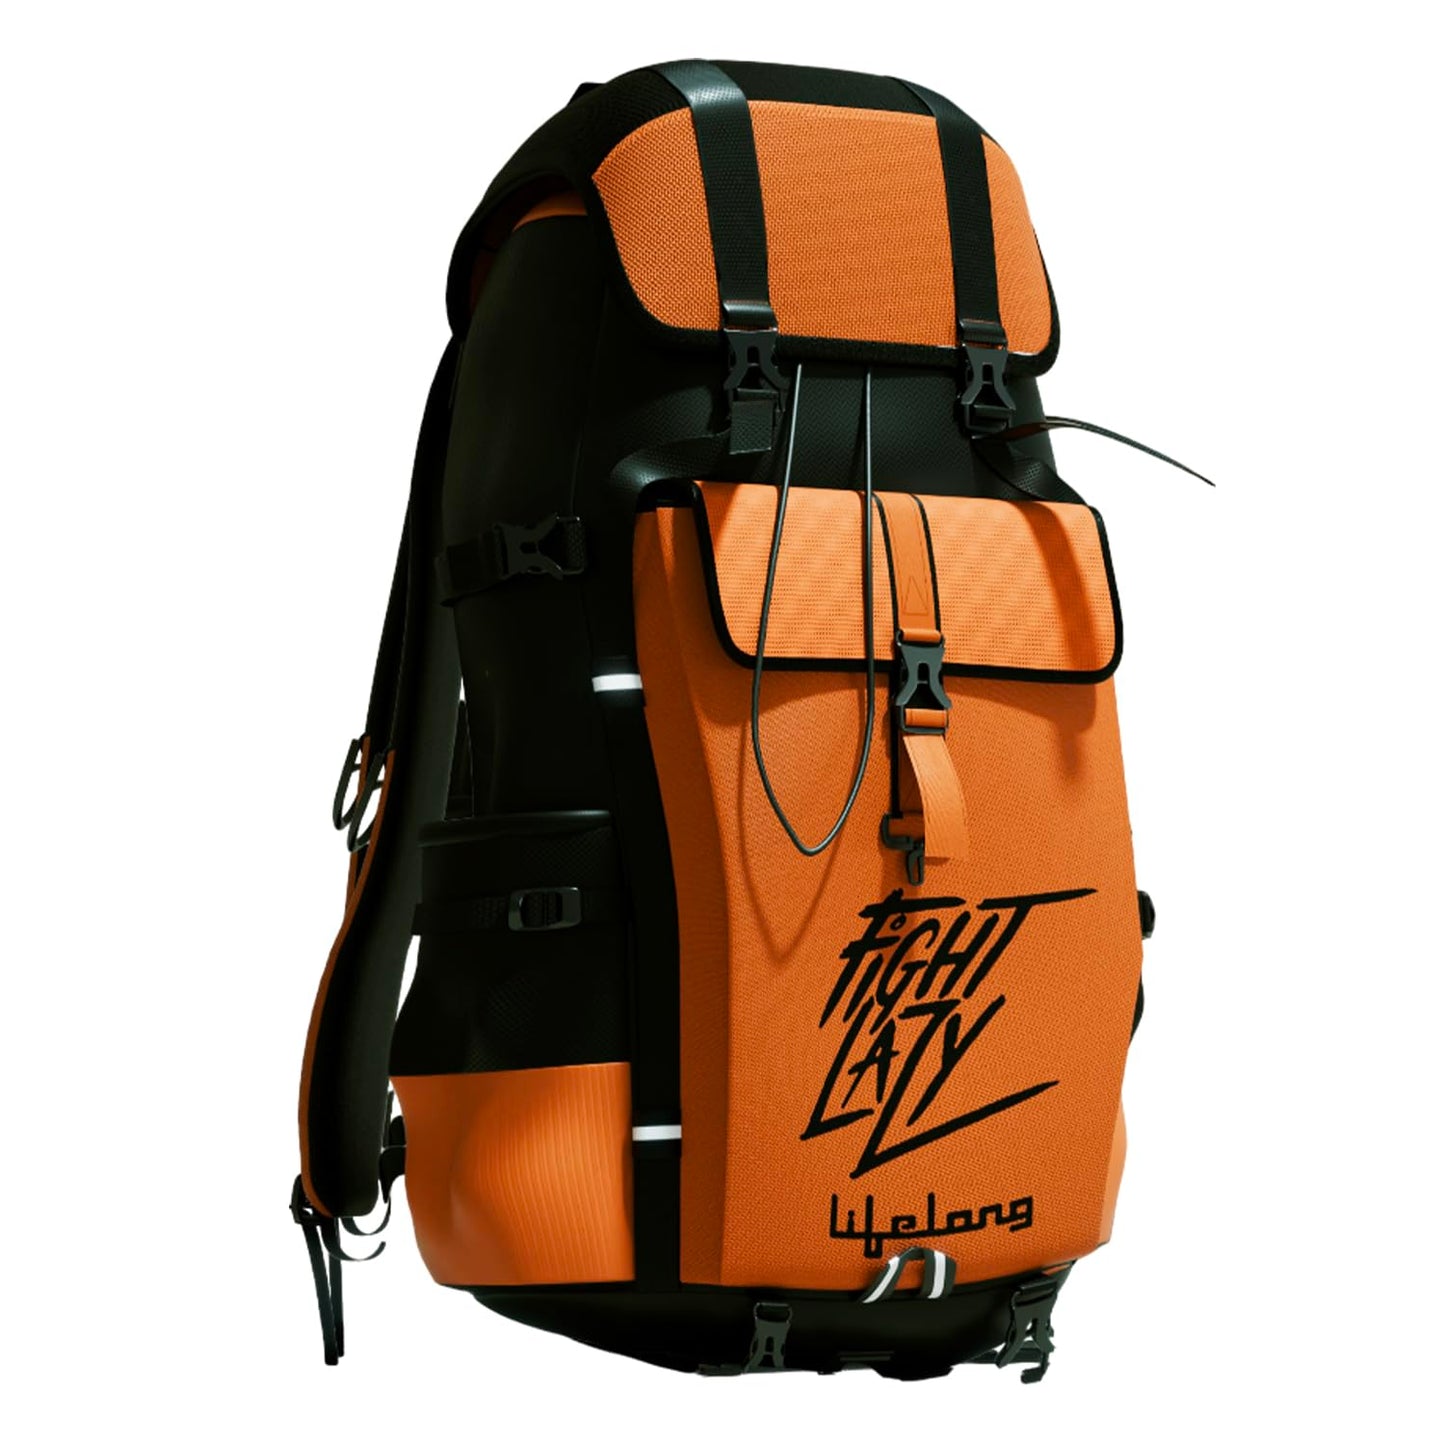 Lifelong 80 Ltr Travel Backpack - Rucksack Bags For Men & Women's - Trekking Bag Laptop Compartment - Tourist Bag For Travel, Hiking, Camping & Trekking- Rucksack Bag Accessories - Orange